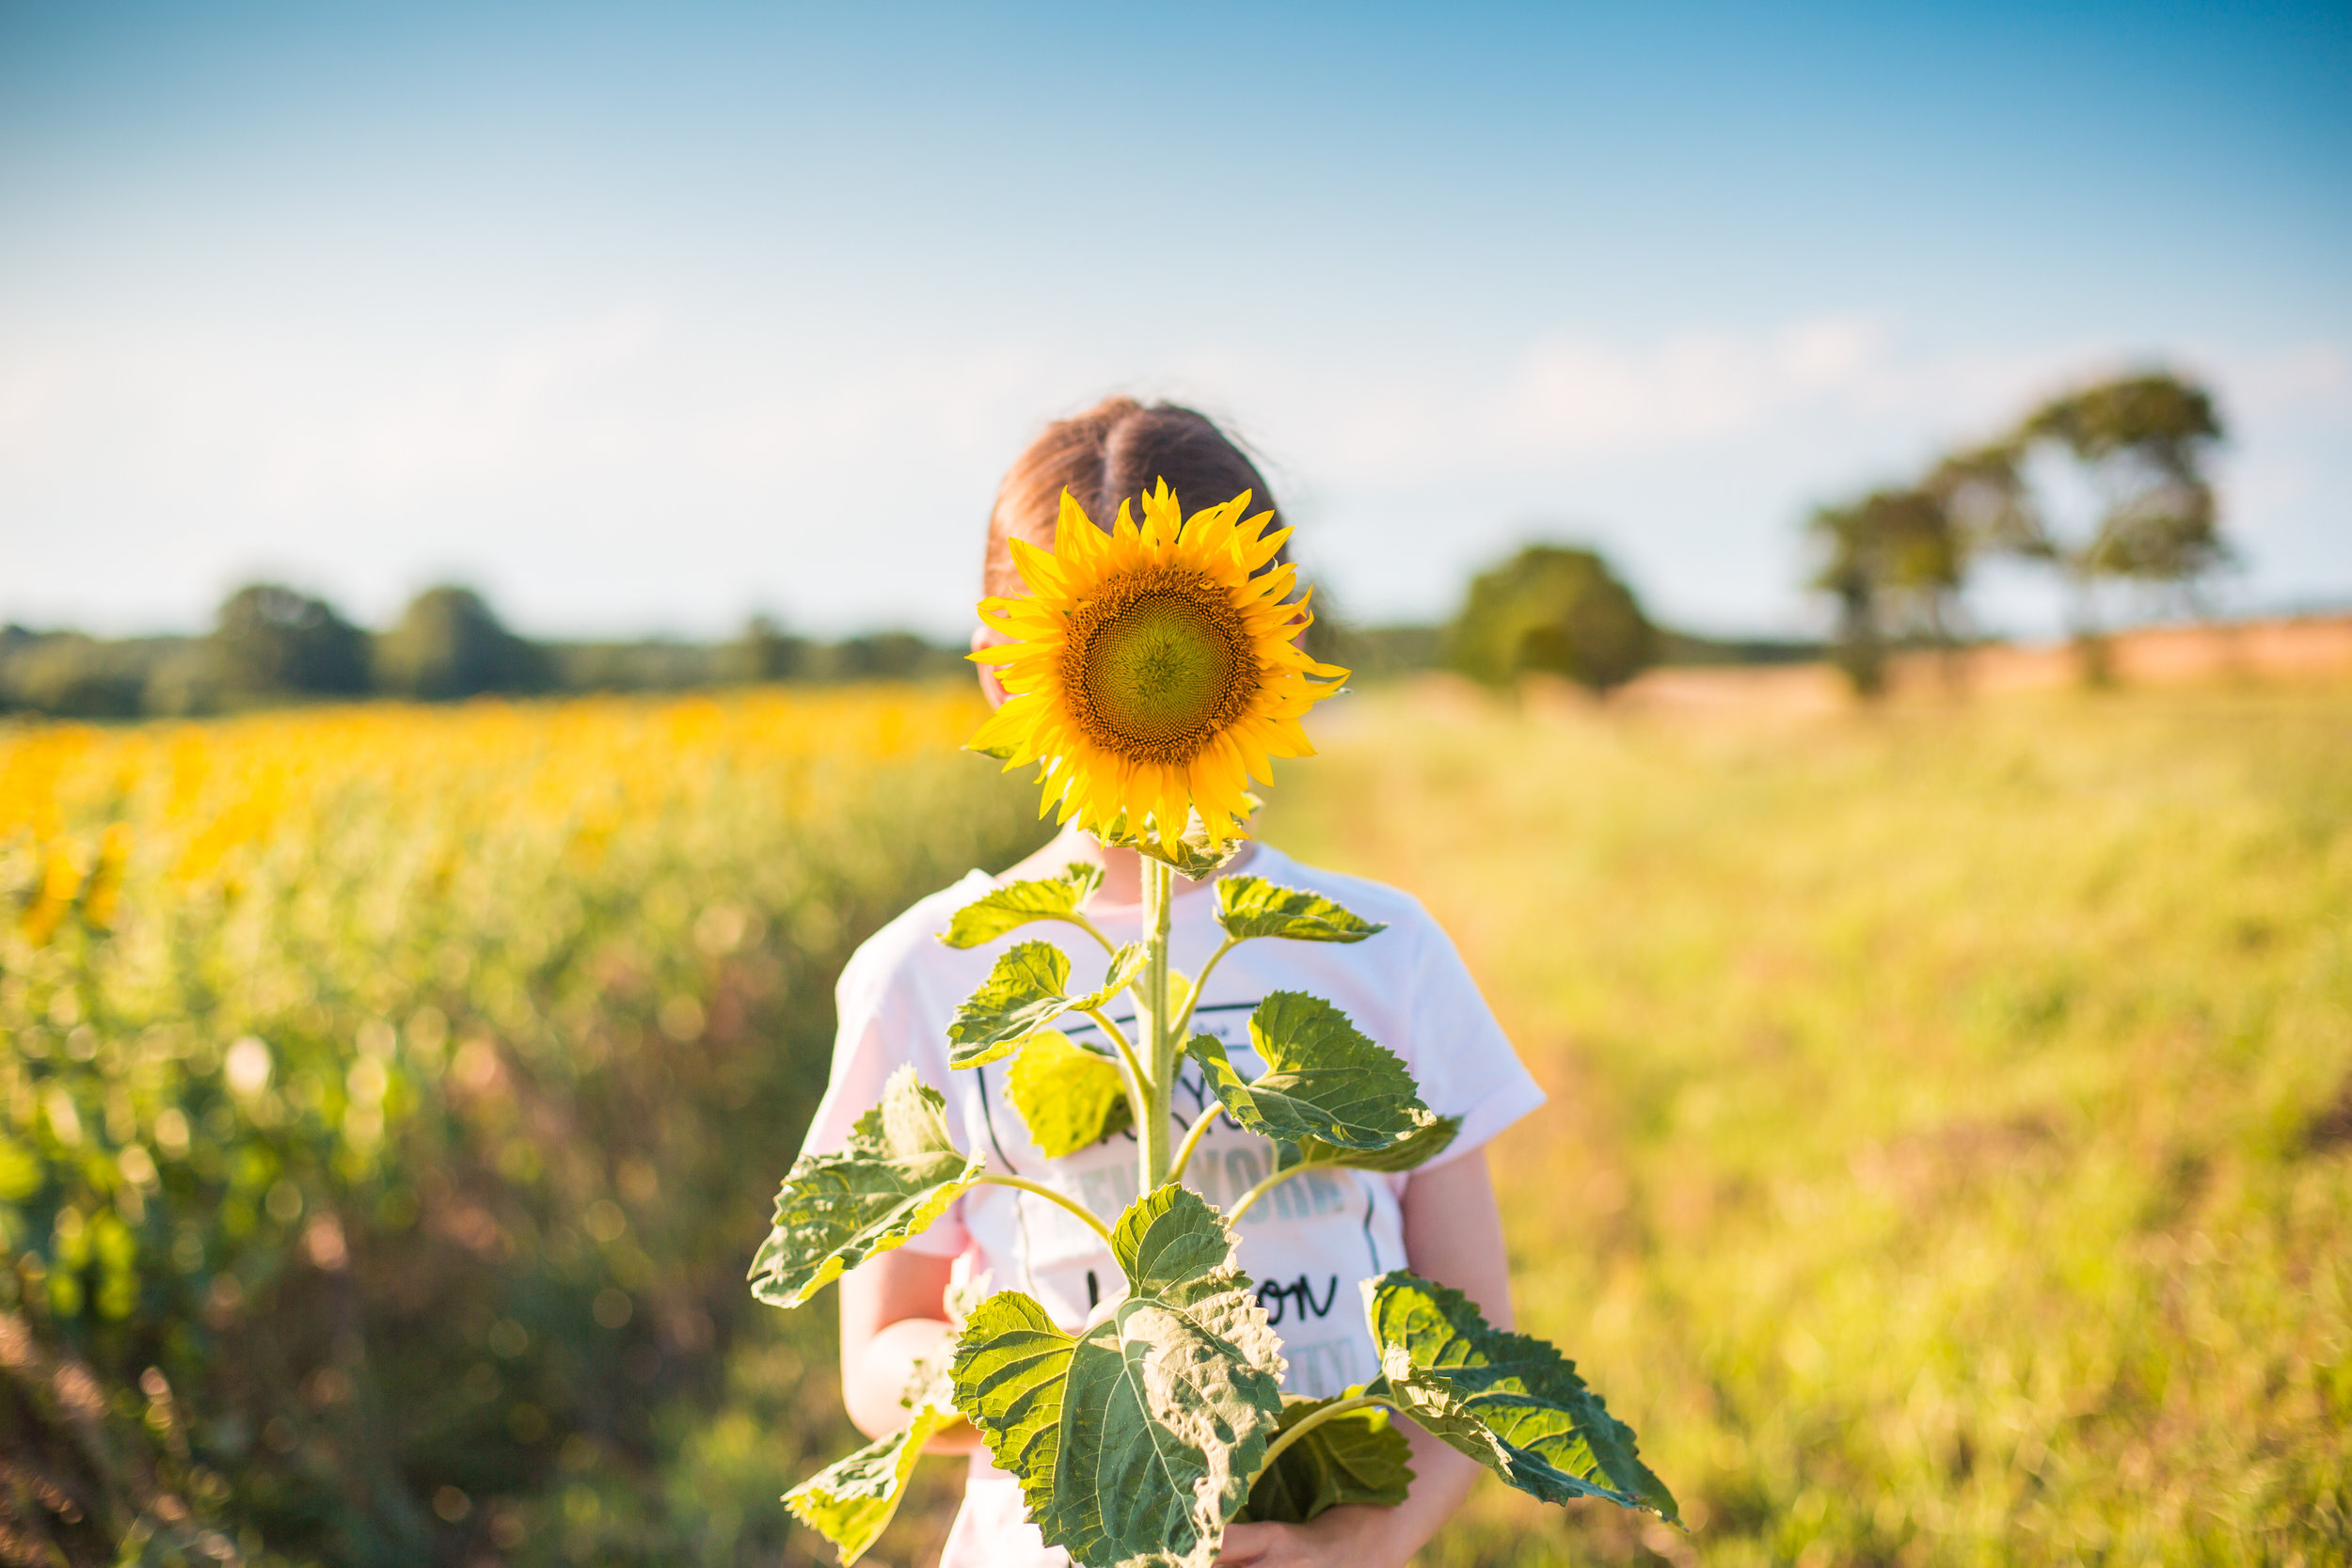 little-girl-with-sunflower-in-a-sunflower-field-picjumbo-com.jpg